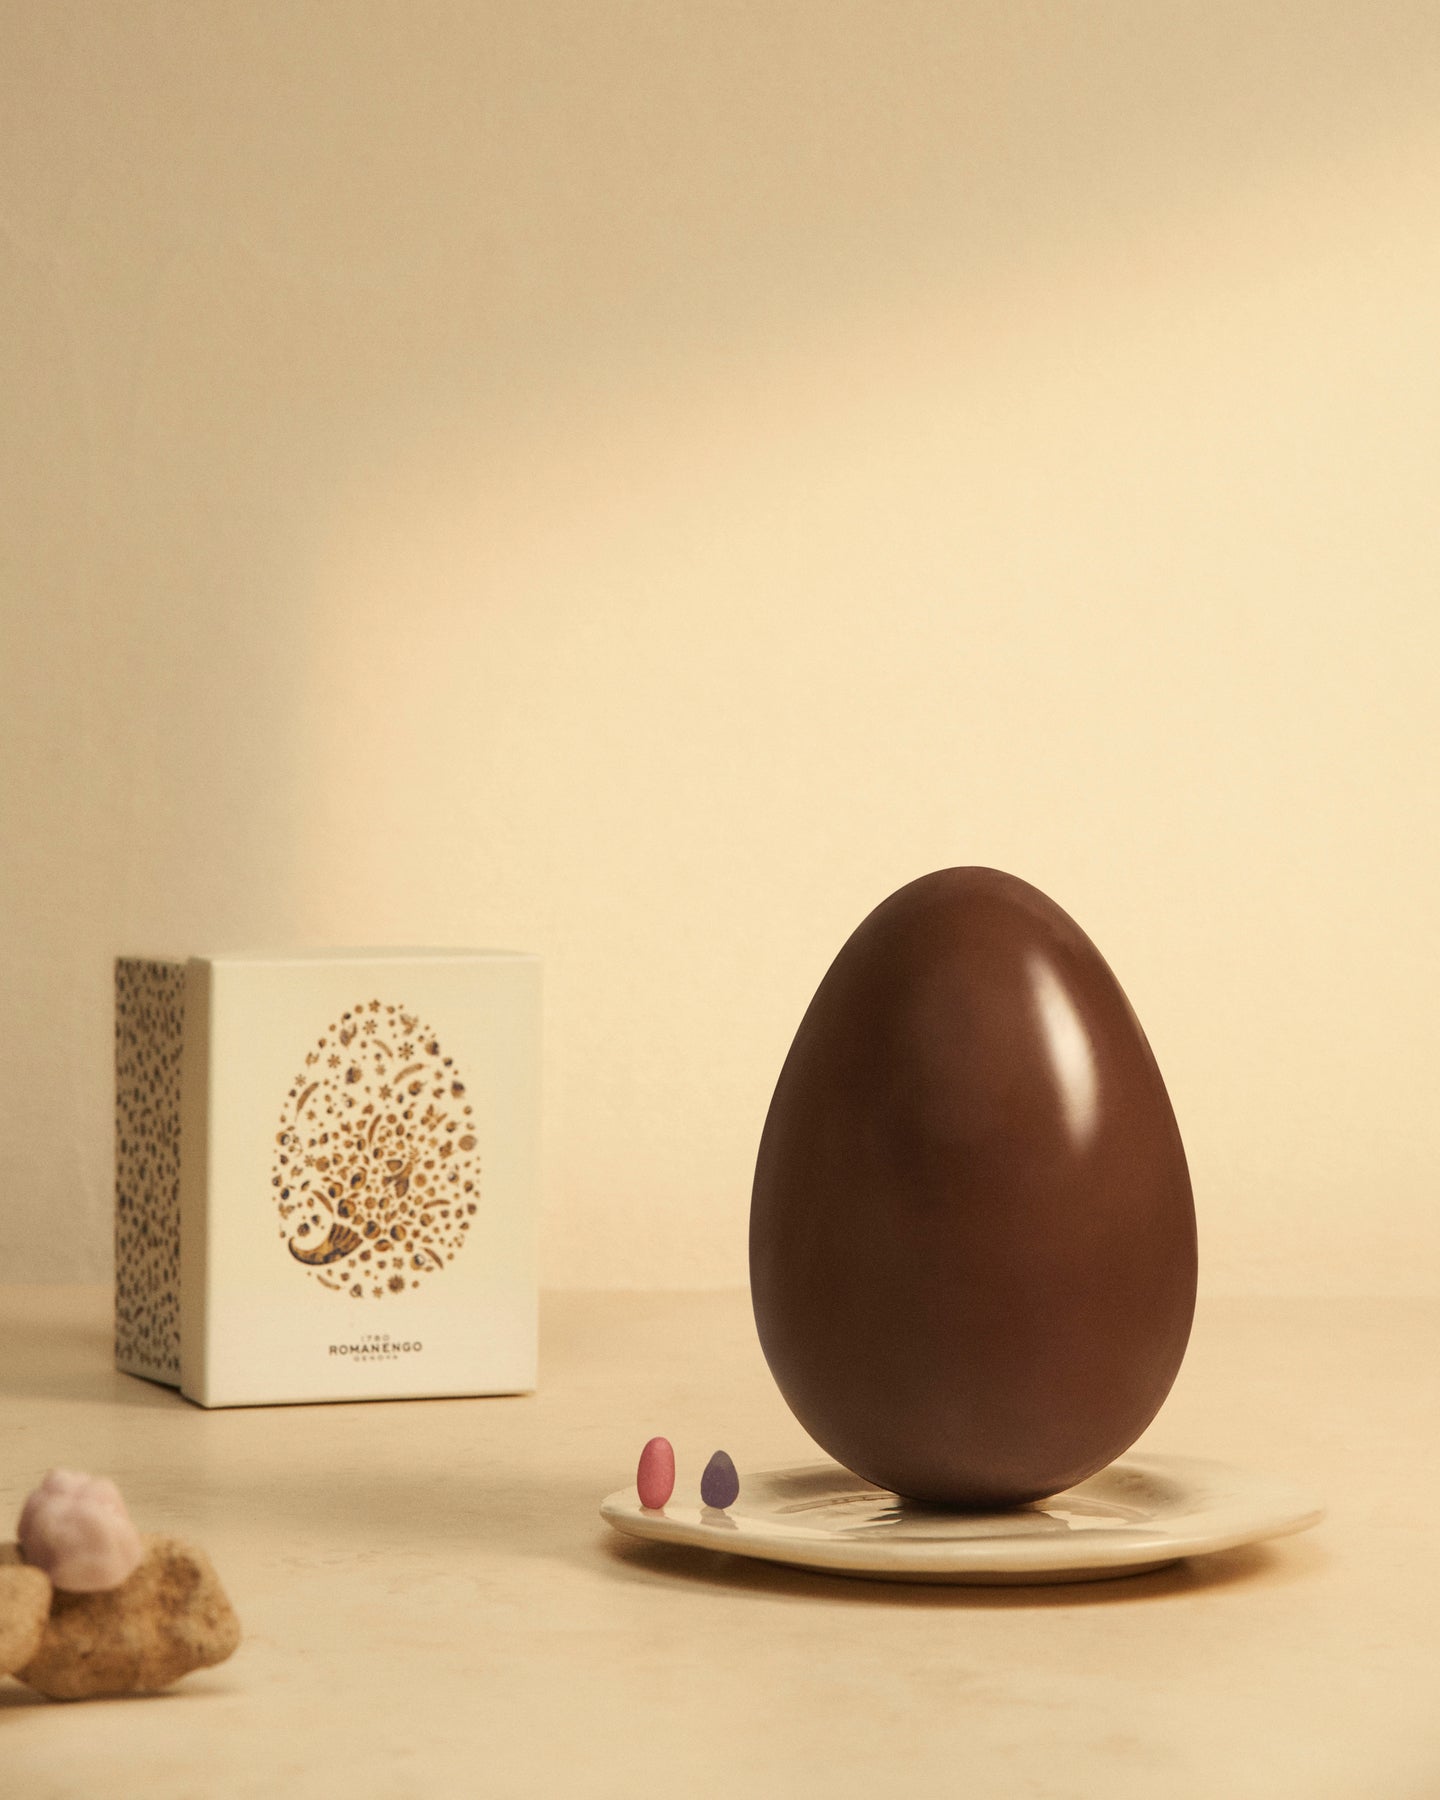 Dark Chocolate Eggs 72% with New Fancy Box